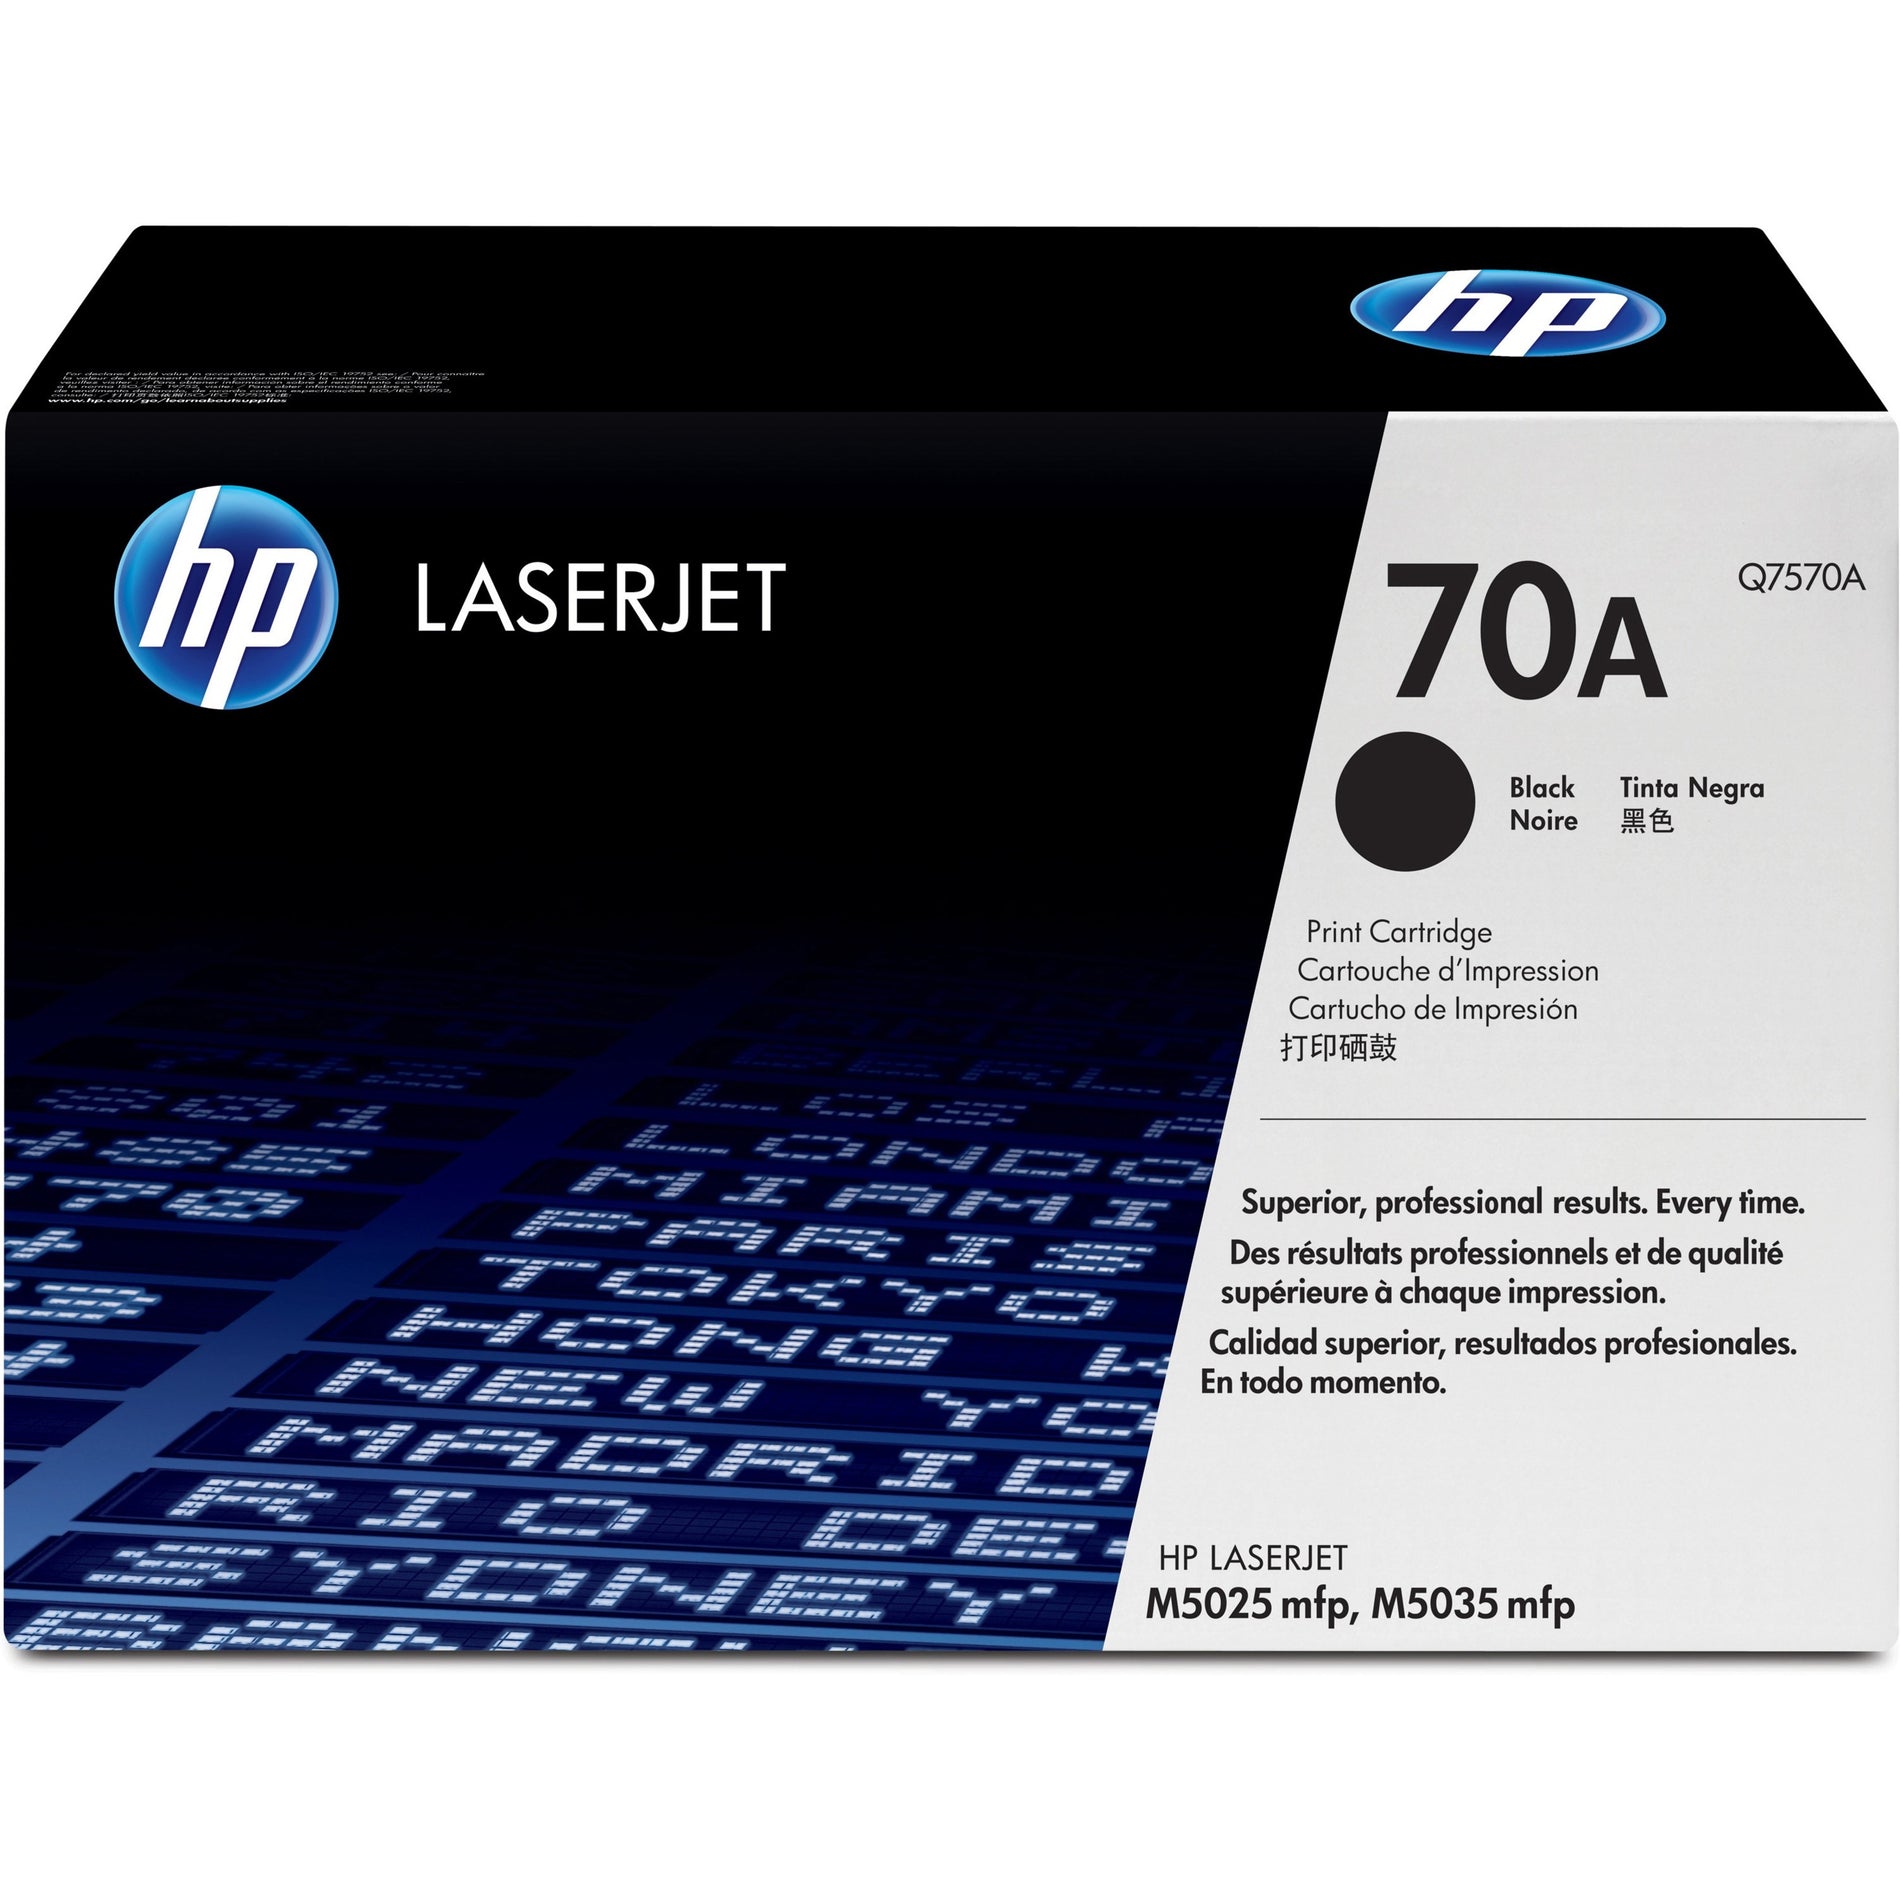 HP Q7570A 70A Laser Print Cartridge, 15000 Page Yield, Black